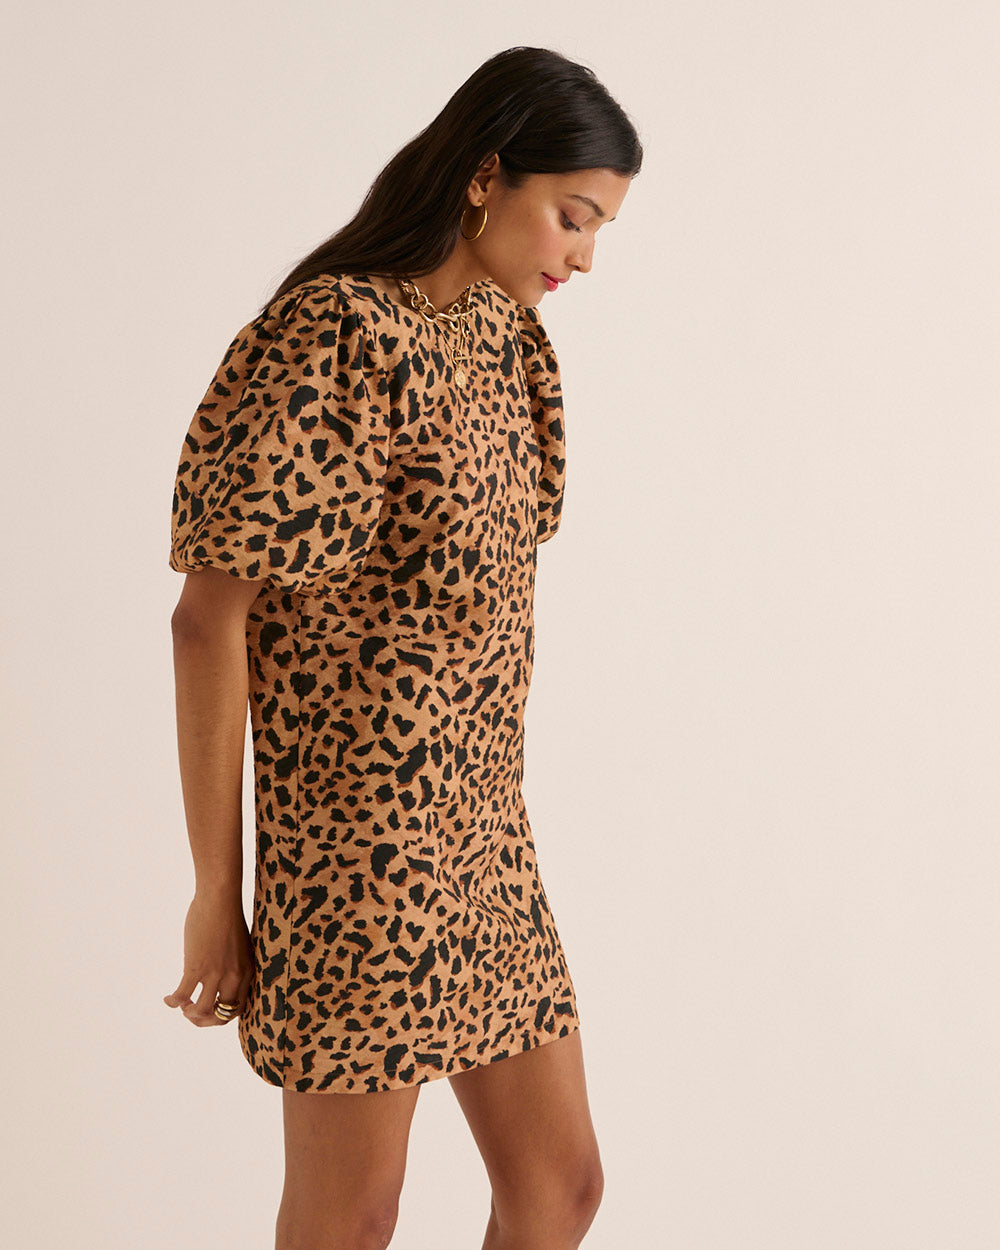 Xoxo cheetah cappuccino dress